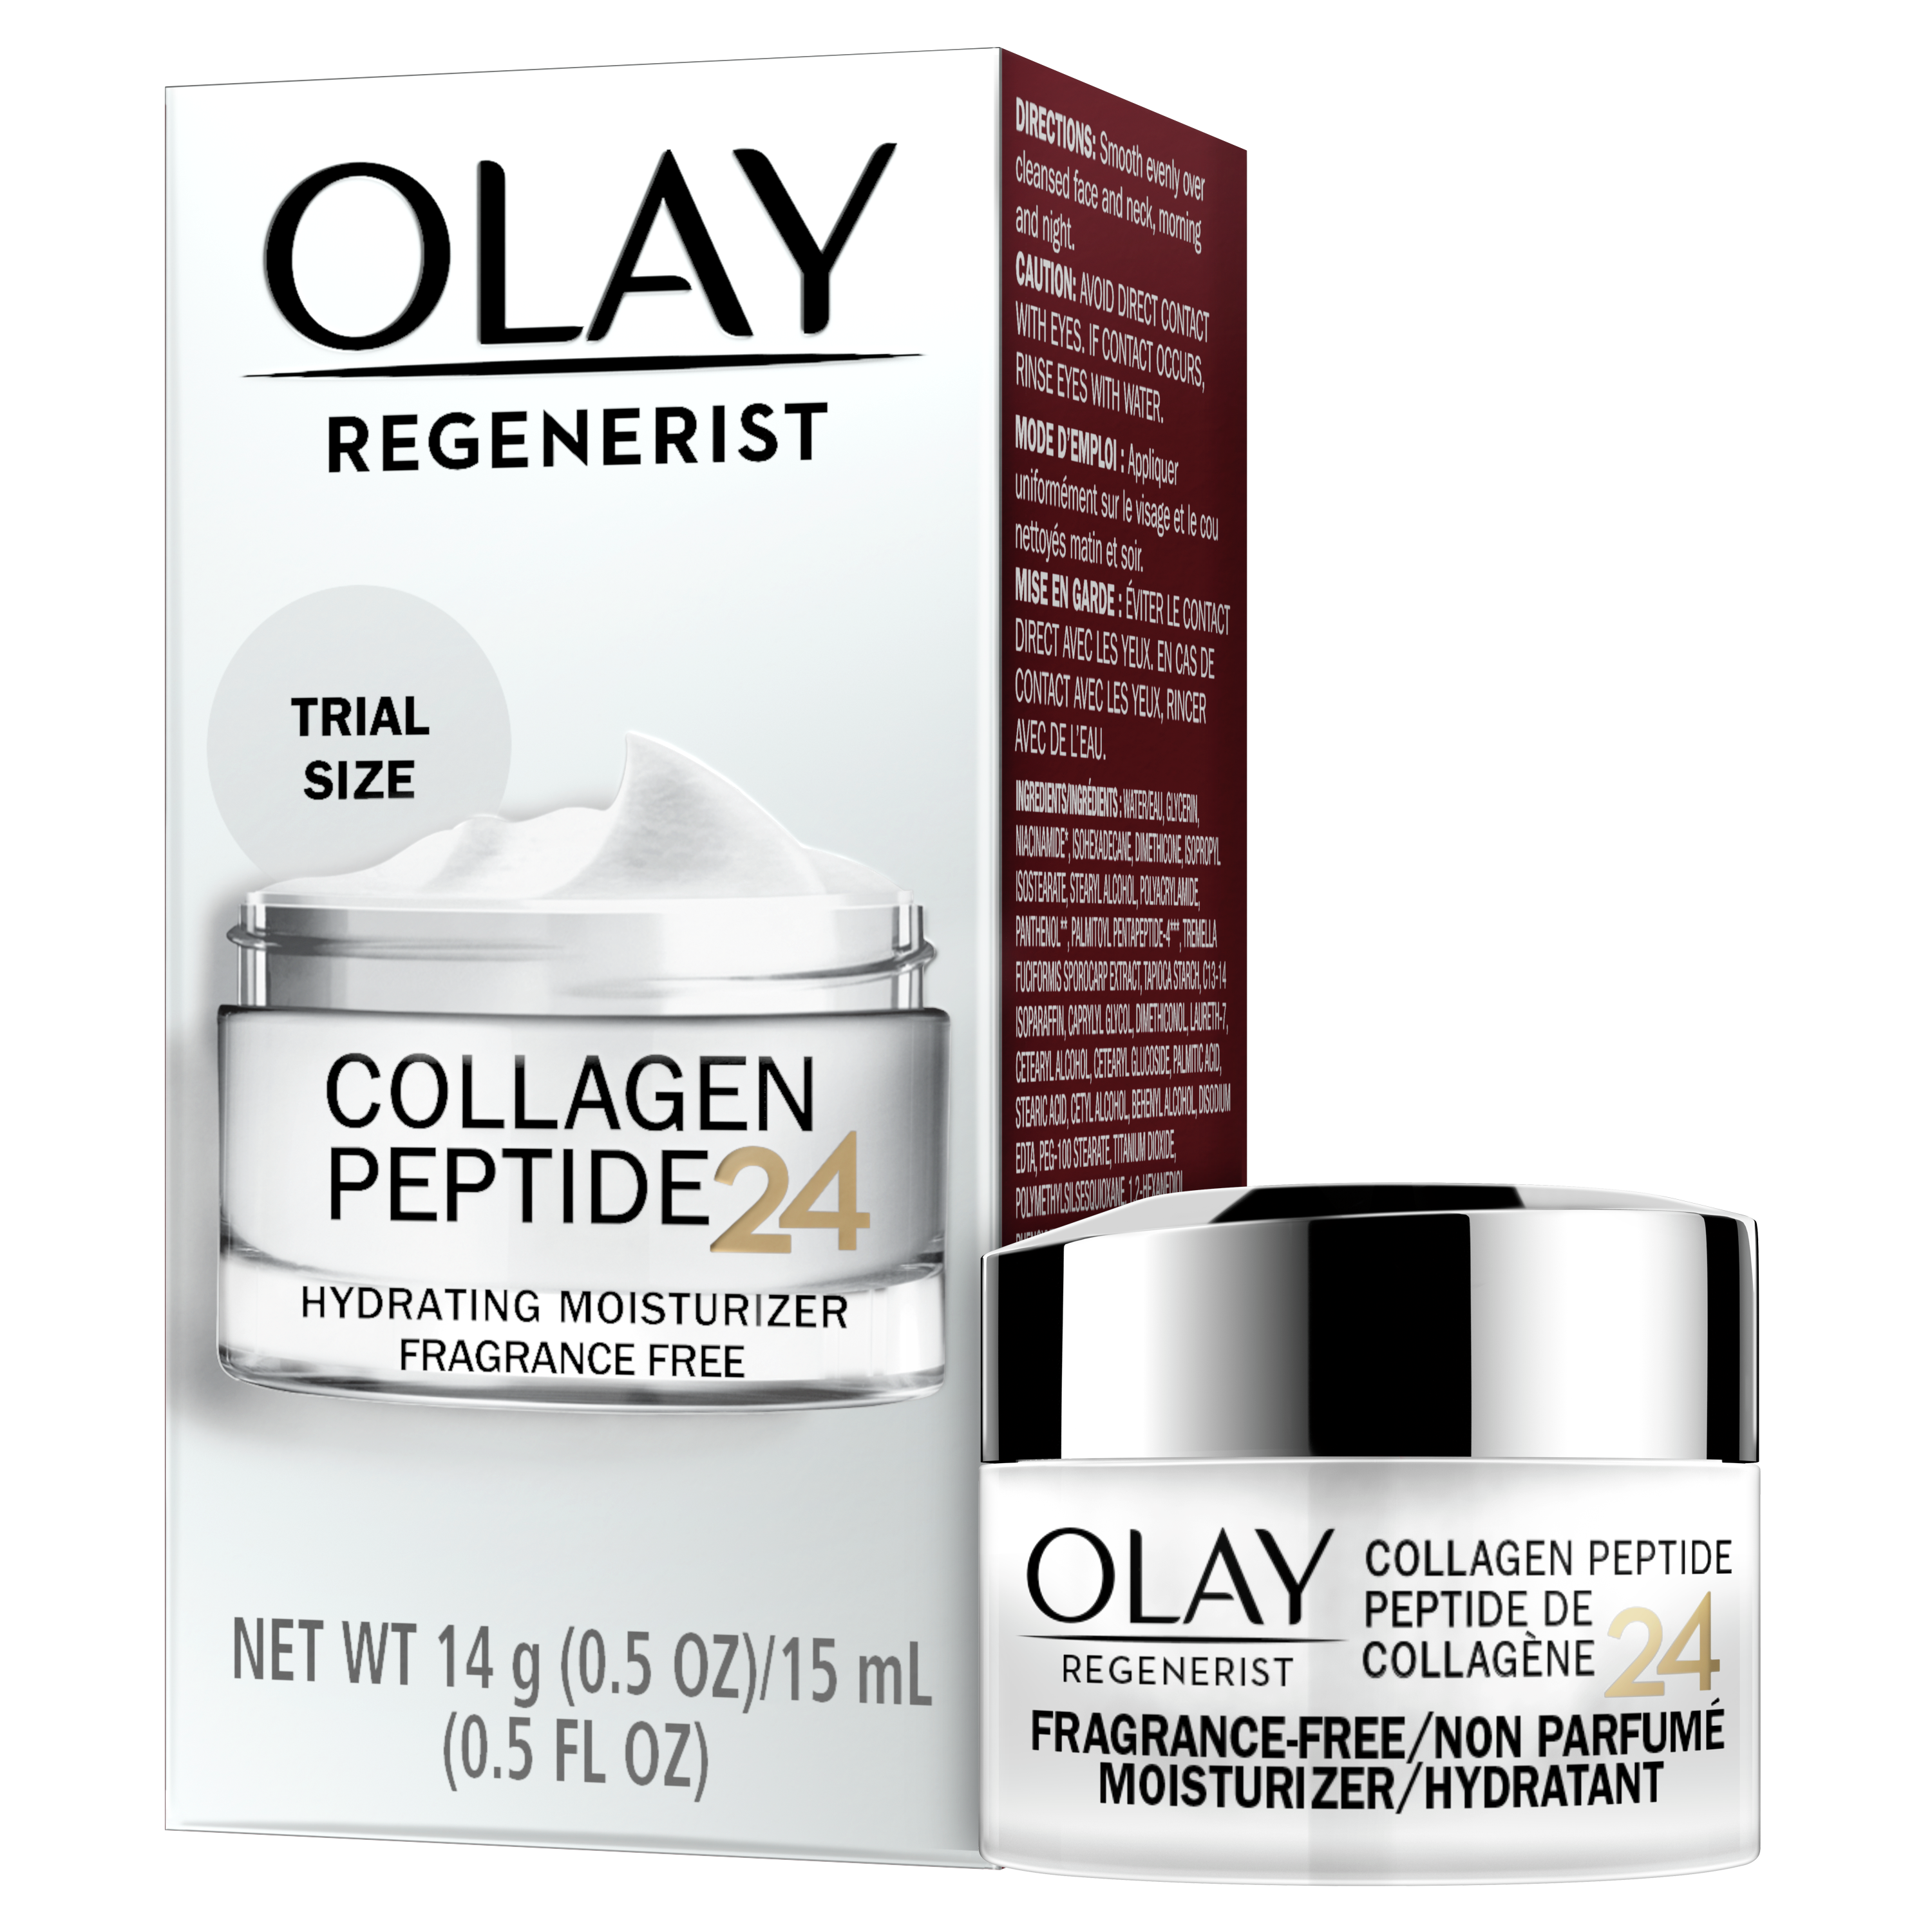 Regenerist Collagen Peptide 24 Face Moisturizer, Trial Size, 15mL